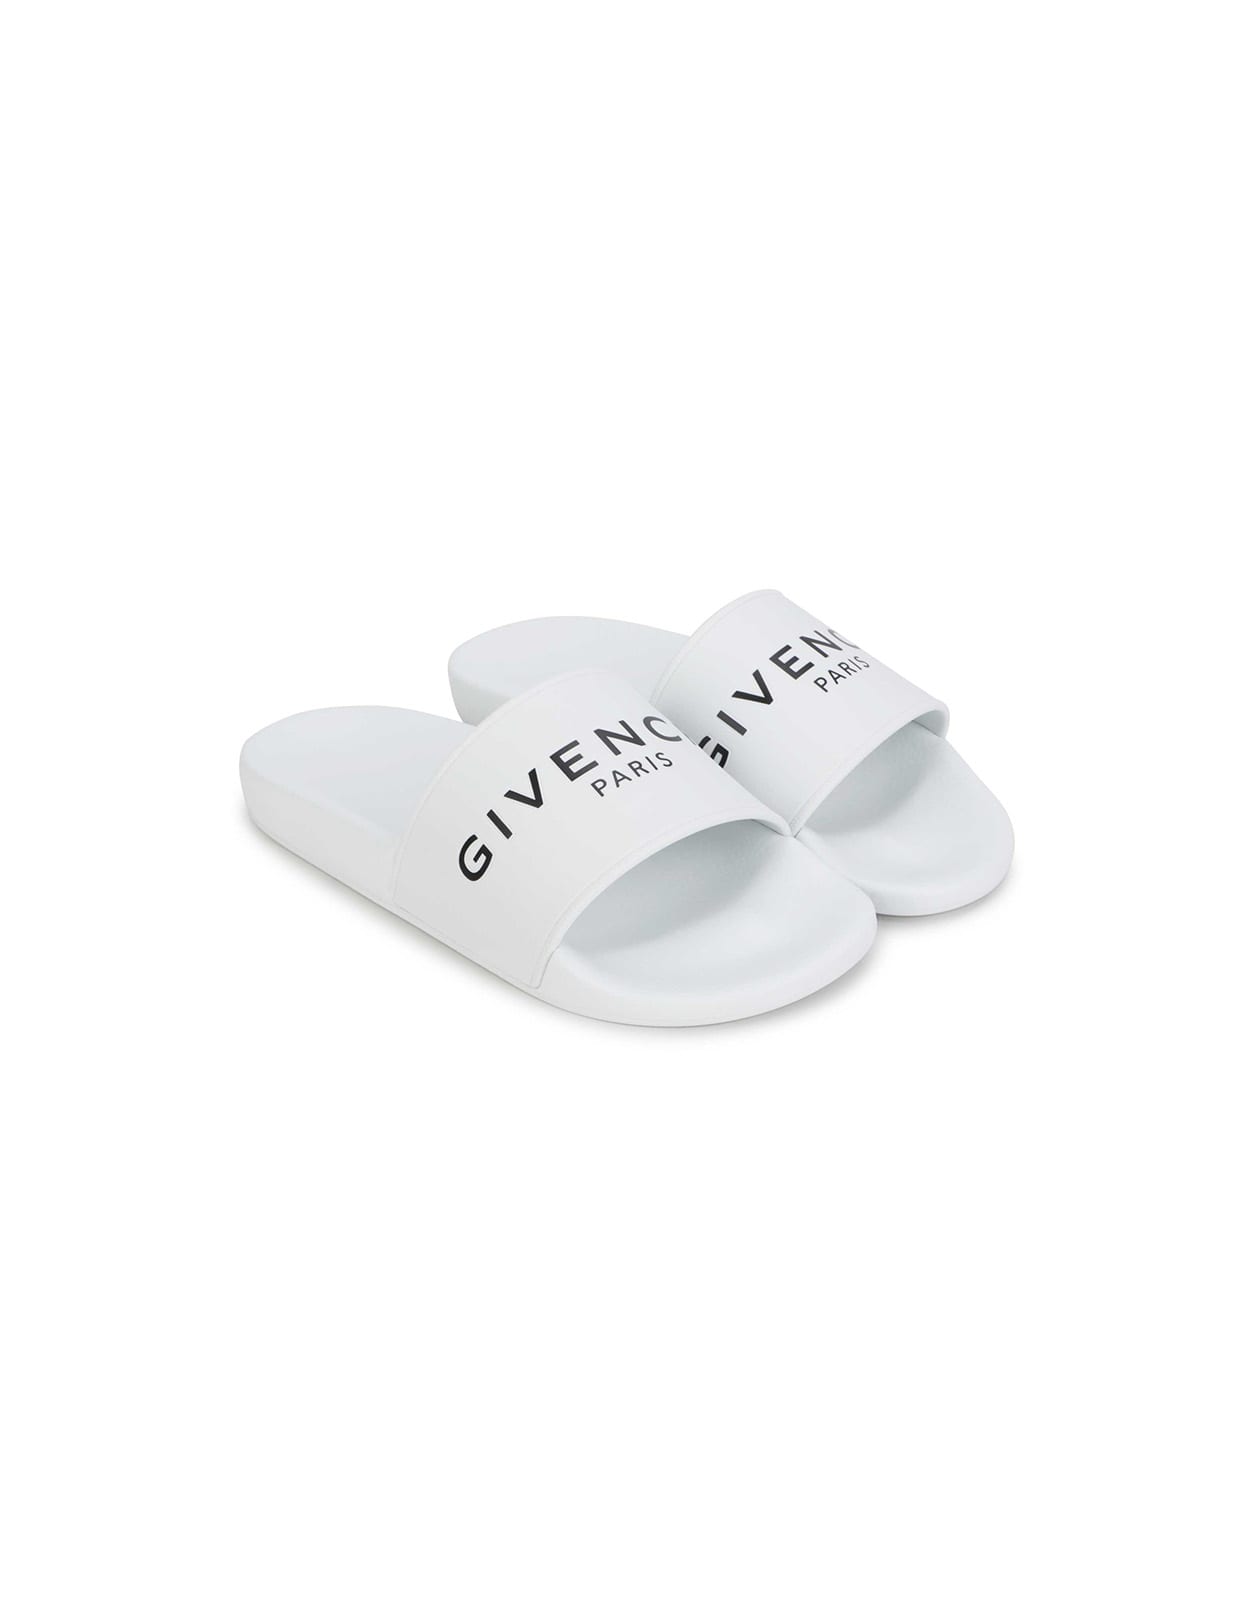 Givenchy White Slipper With Black Logo